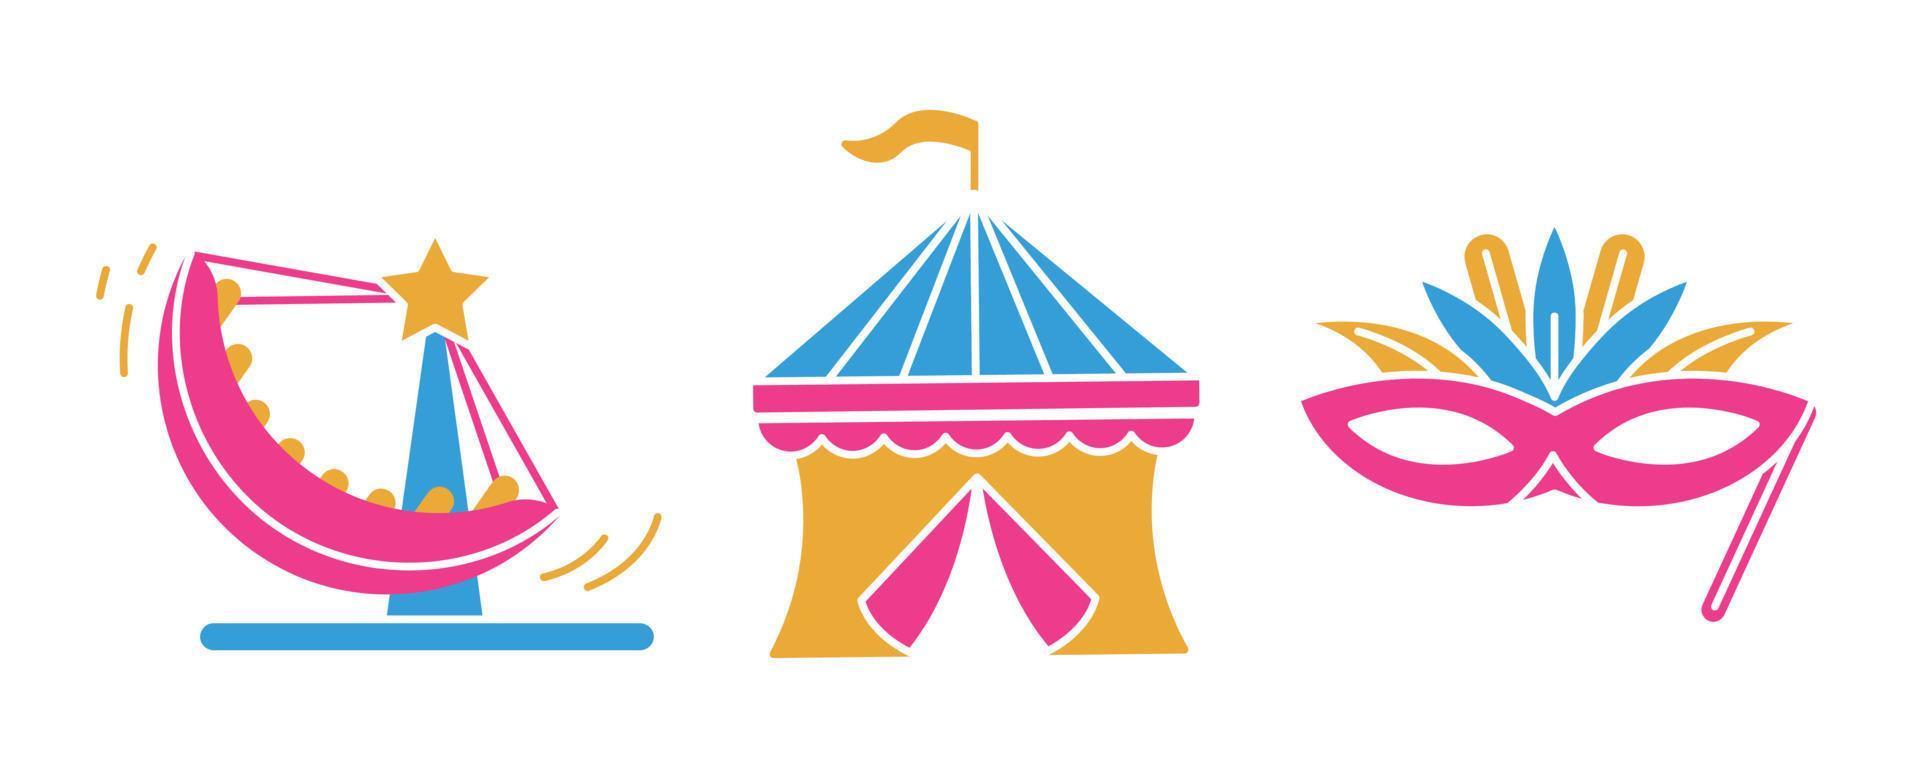 Festival tent-camp, festival scene and amusement park gondola icon set. Festival and event icon set. Colorful icon set. vector